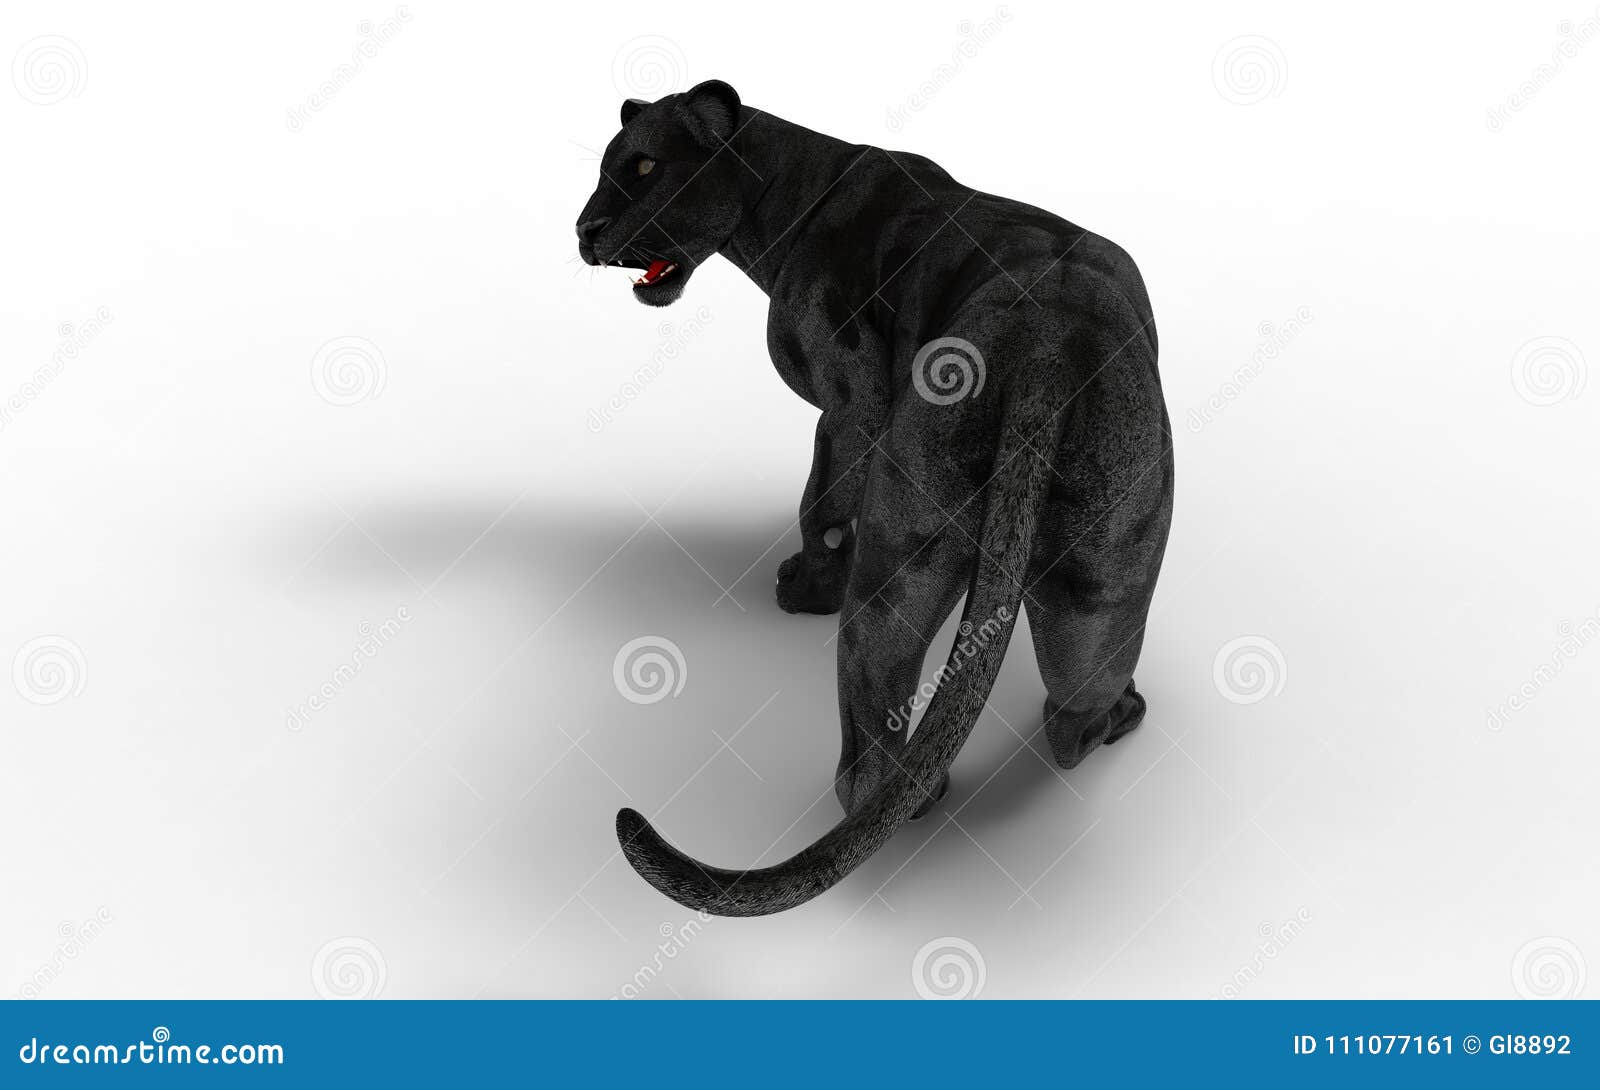 Black Panther Isolate on White Background Stock Illustration - Illustration  of dangerous, fear: 111077161